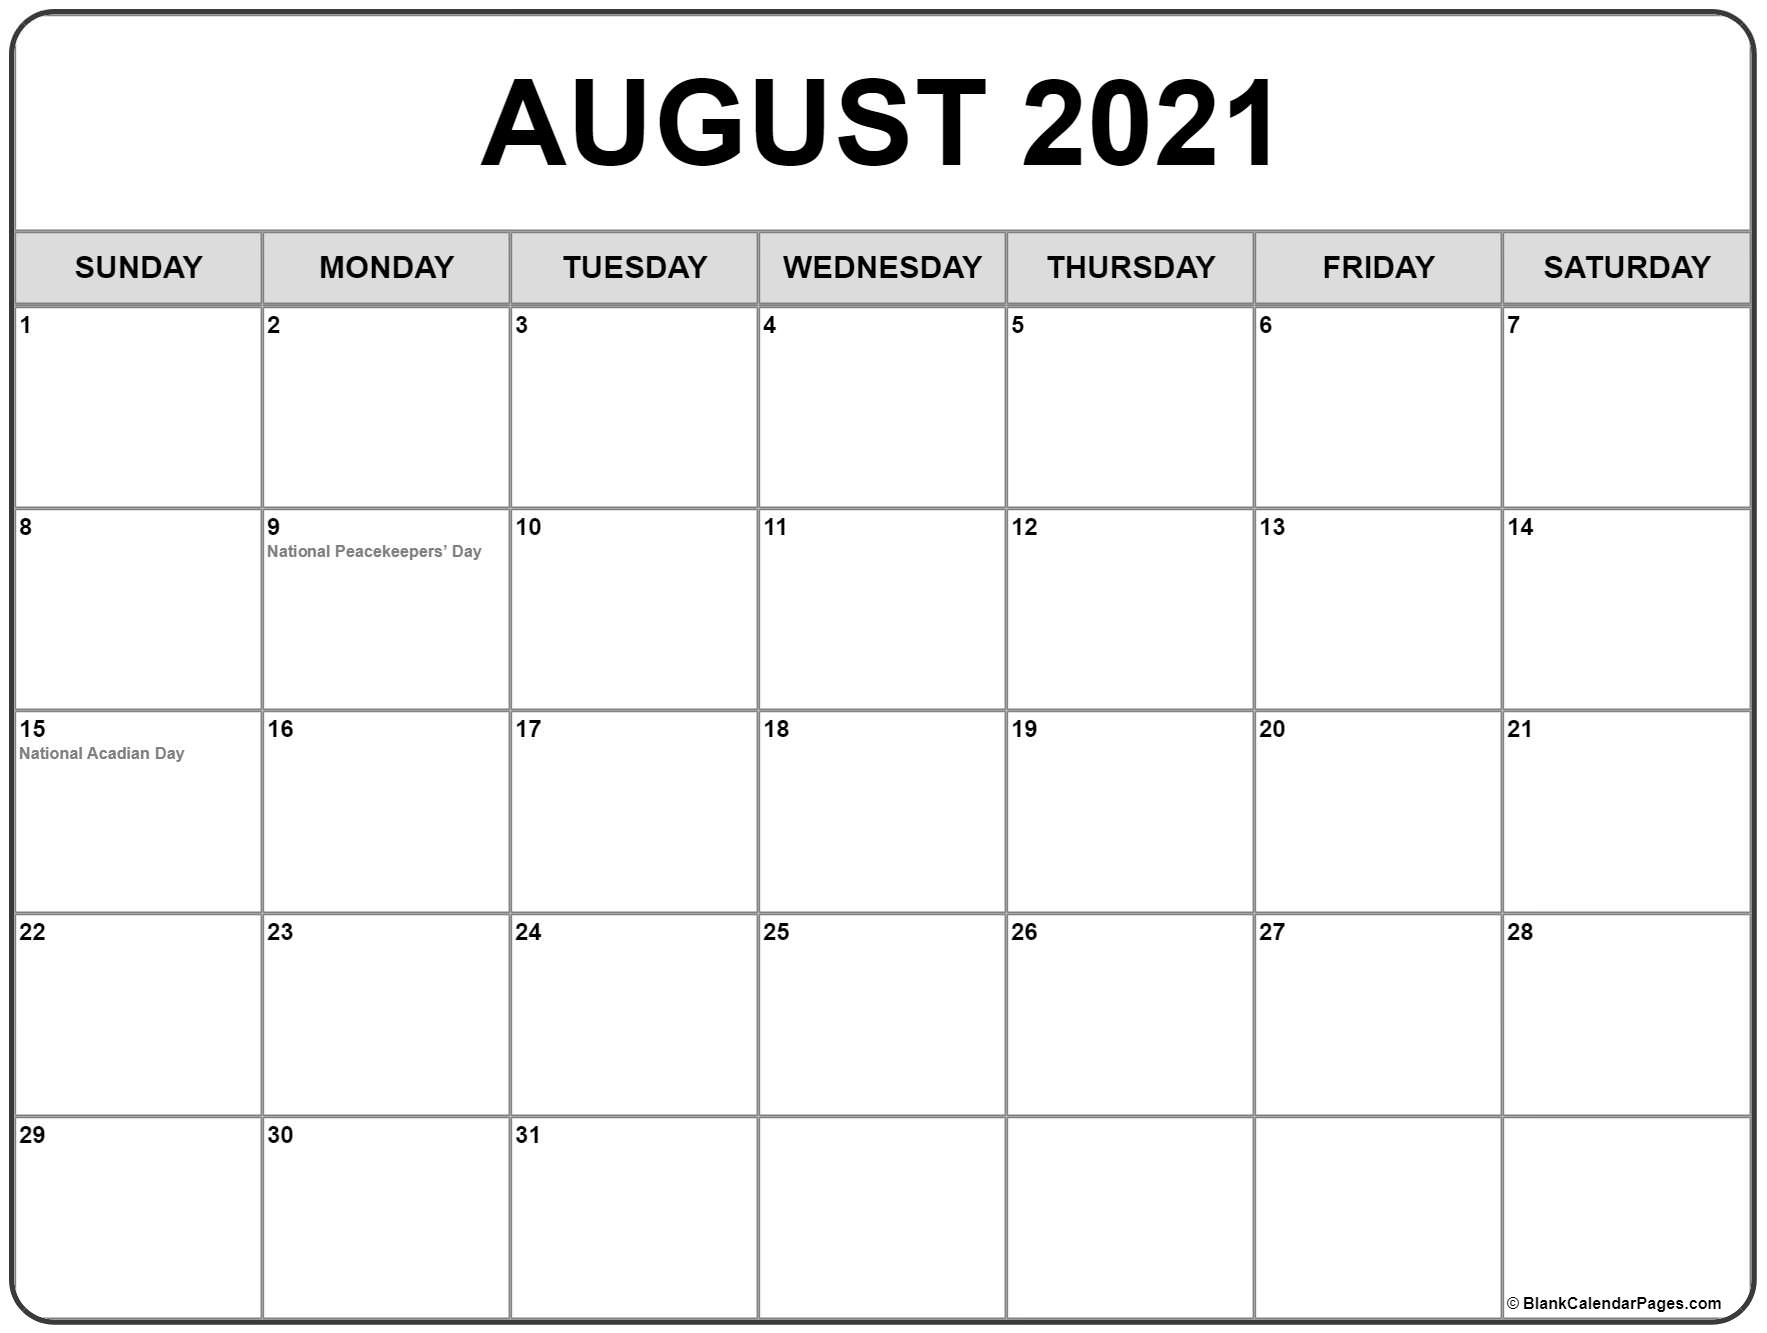 Catch Calendar Print Out August 2021 Fun